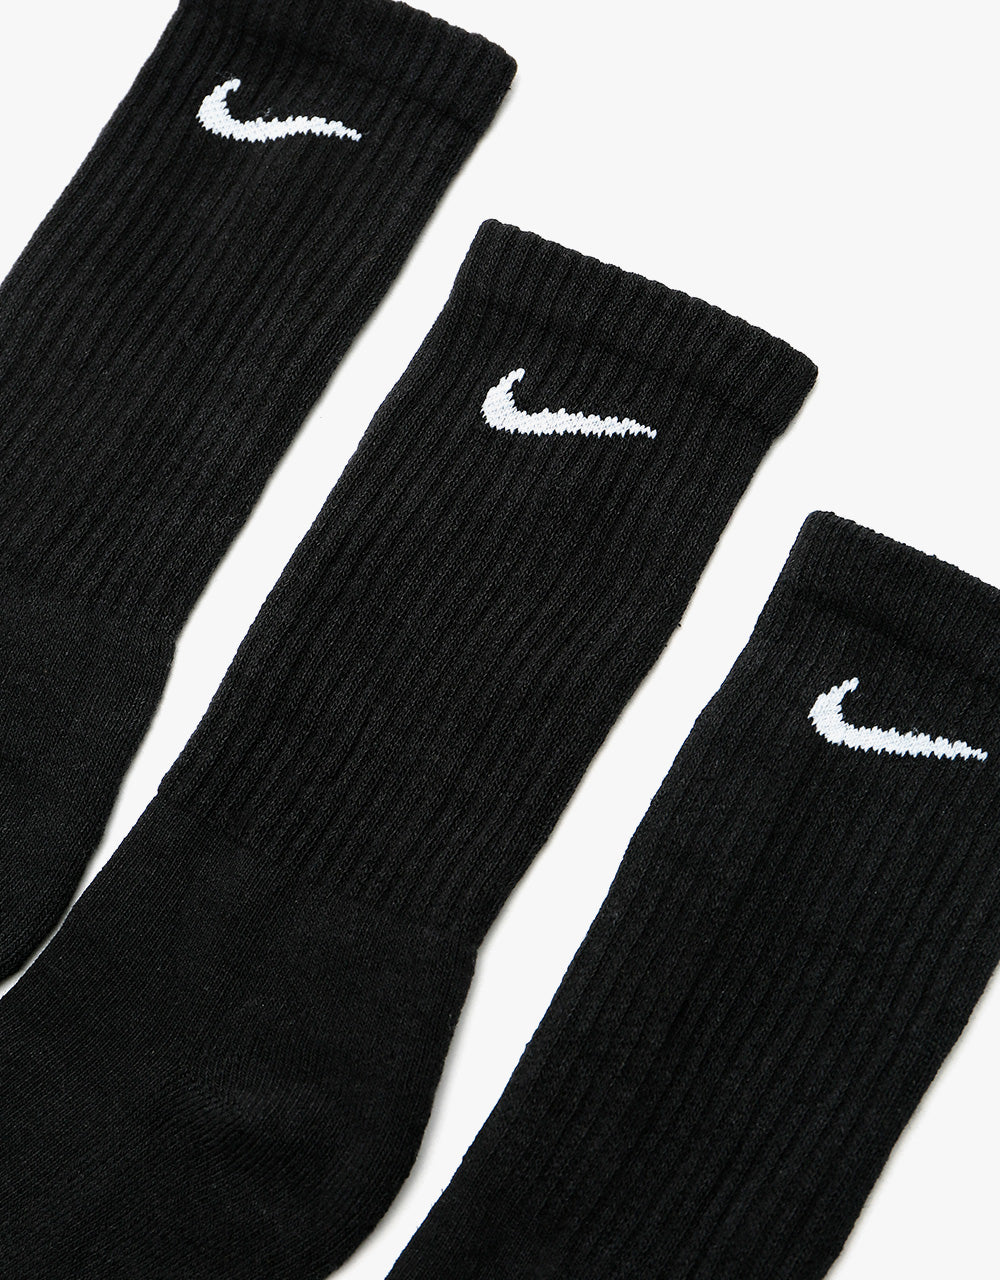 Nike SB Everyday Cushioned Socks 3 Pack - Black/White